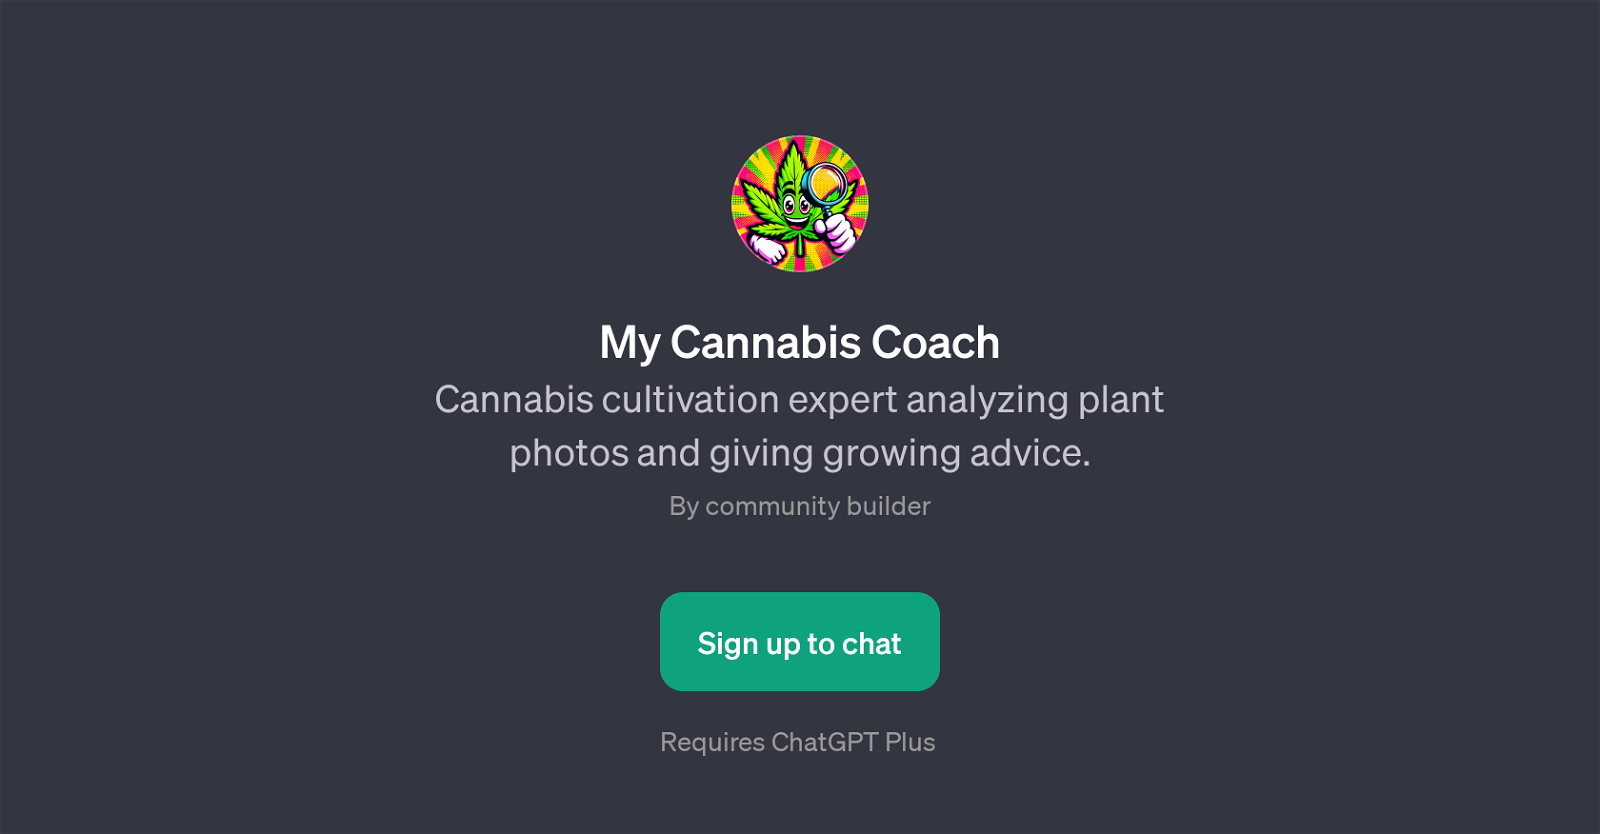 My Cannabis Coach website